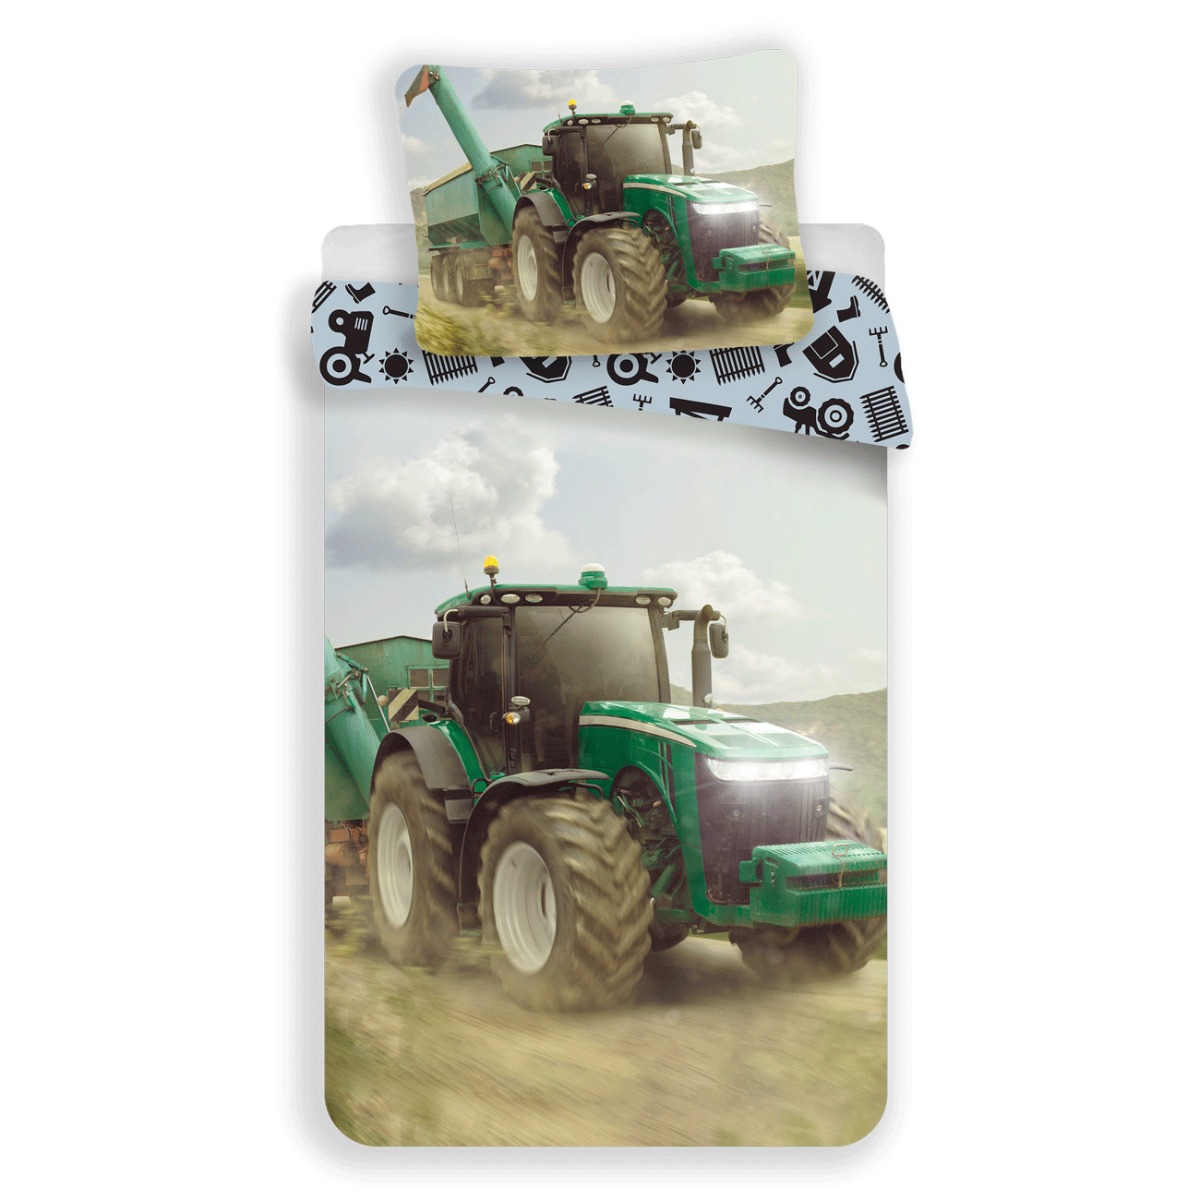 Tractor Single Cotton Duvet Cover and Pillowcase Set - European Size